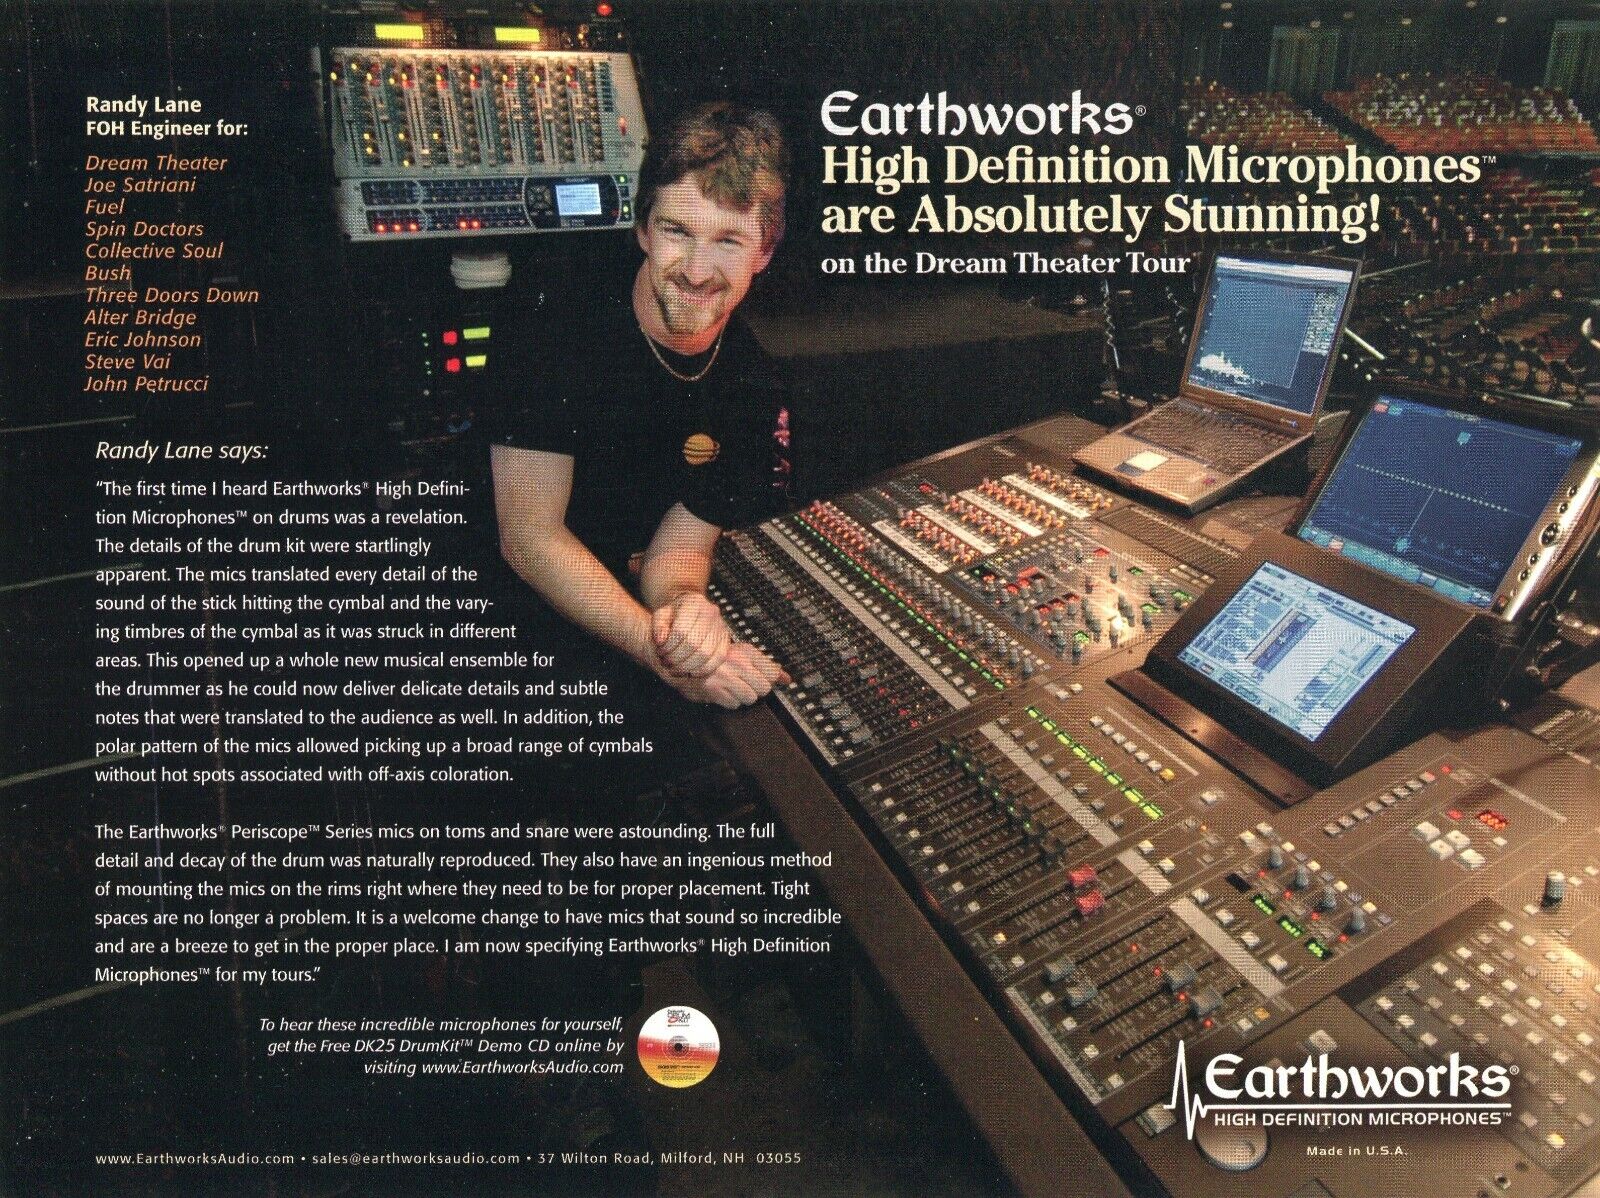 2007 Print Ad of Earthworks High Definition Microphones w Engineer Randy Lane